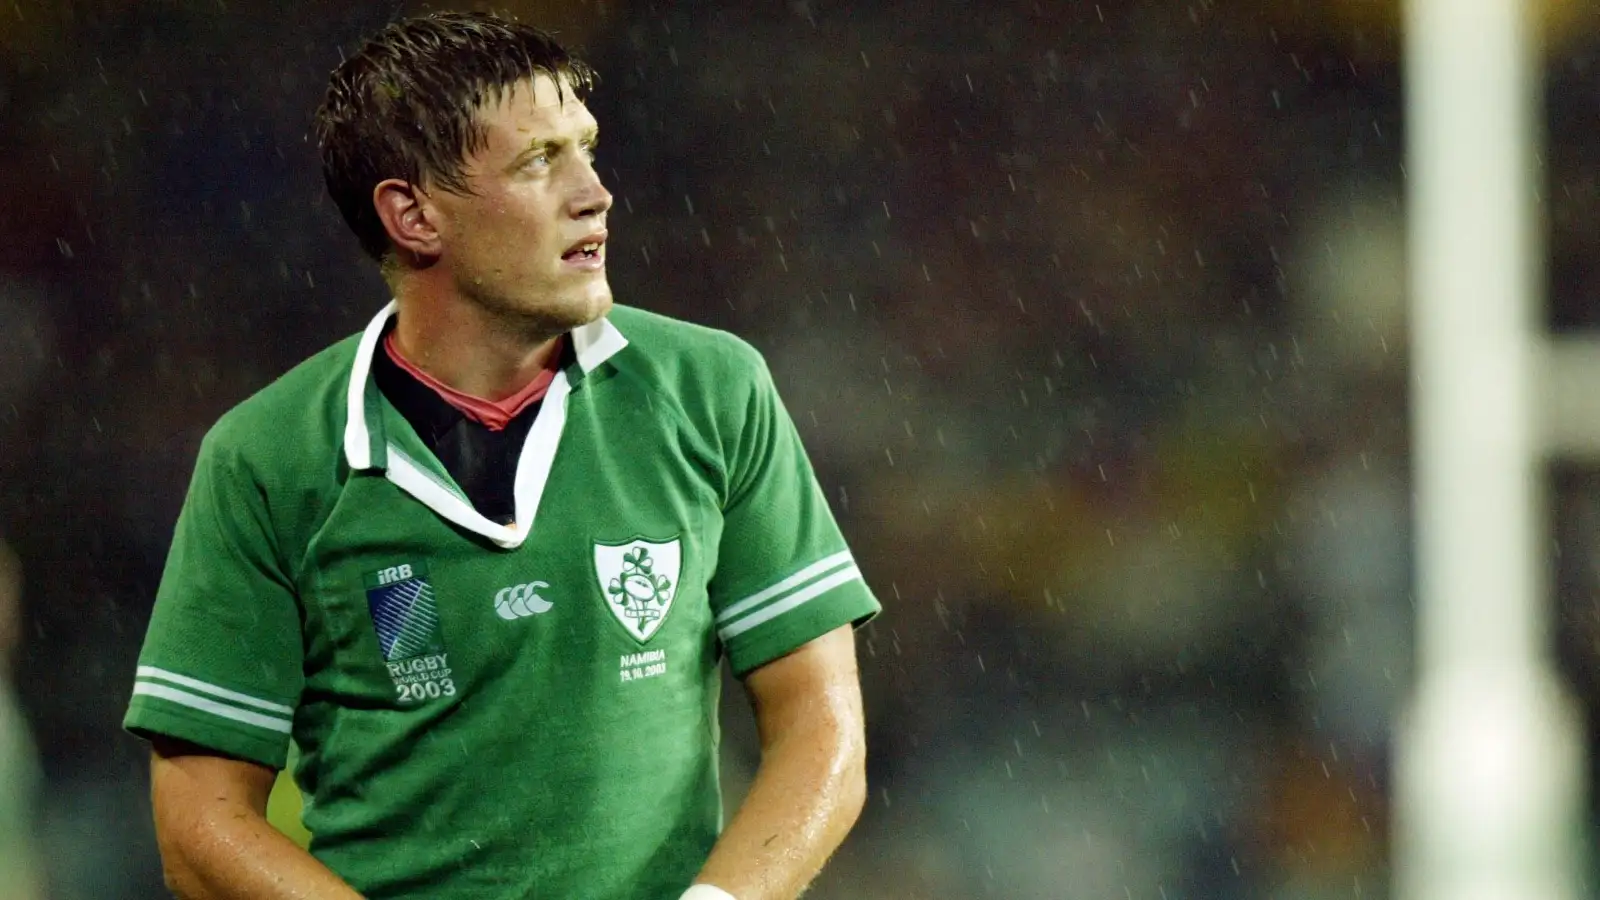 Rugby World Cup: Ireland's Ronan O'Gara looks on